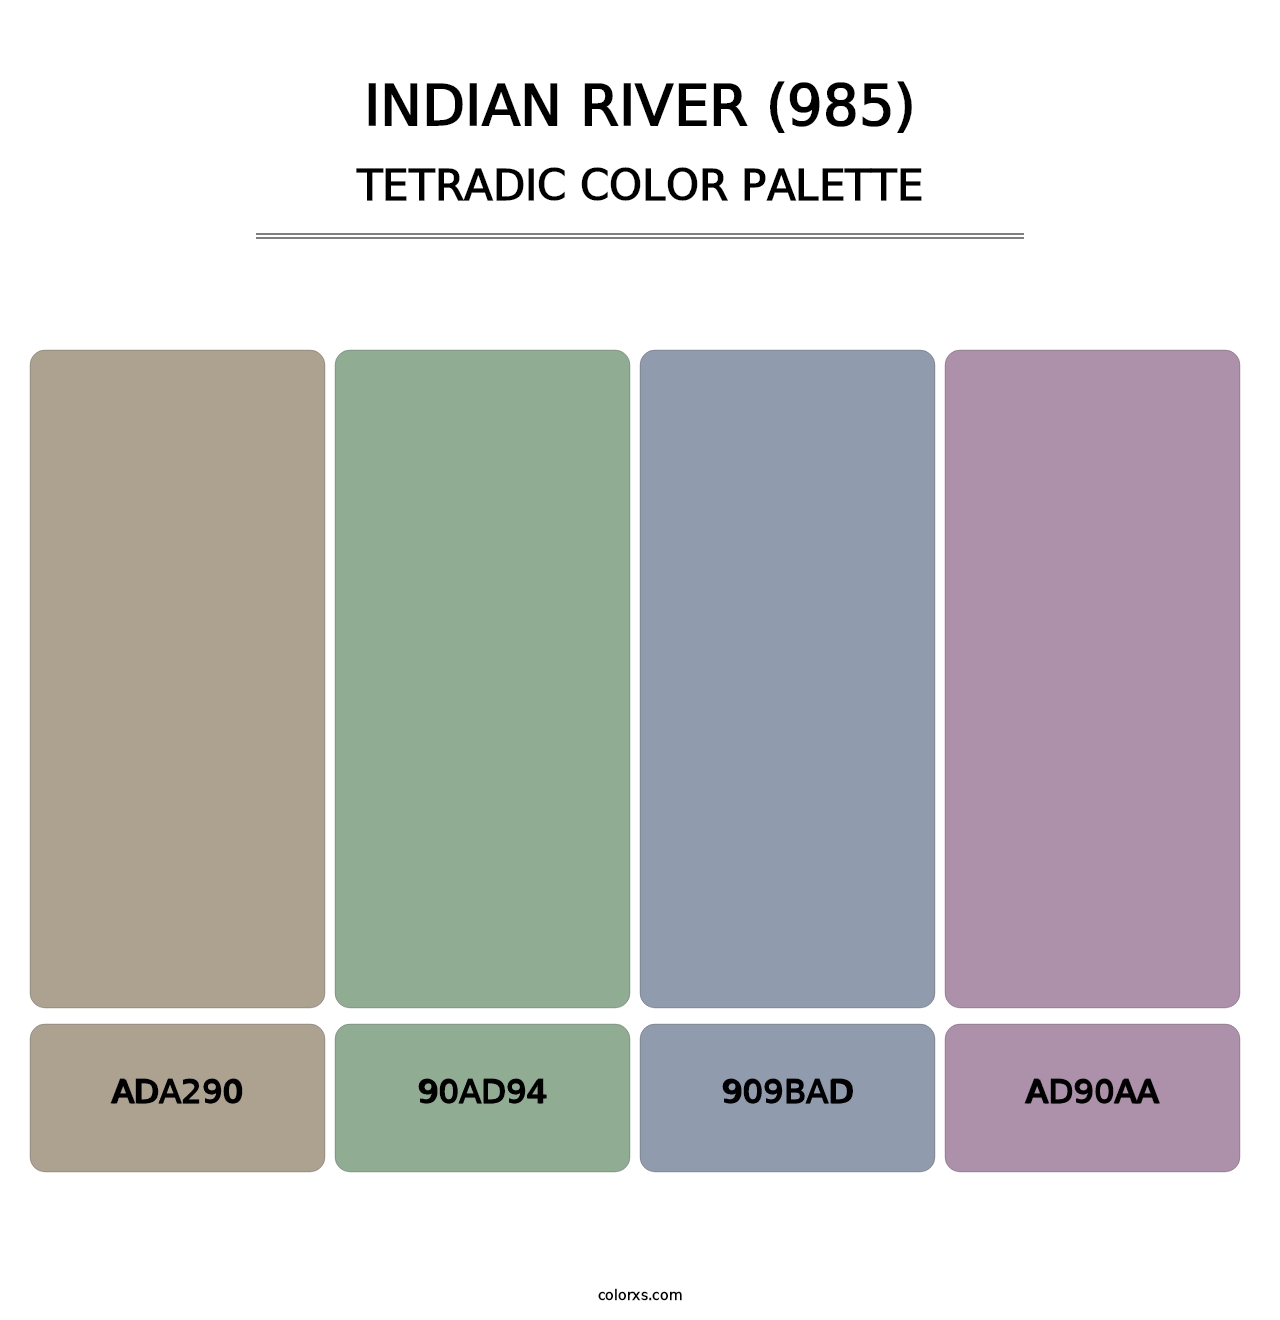 Indian River (985) - Tetradic Color Palette